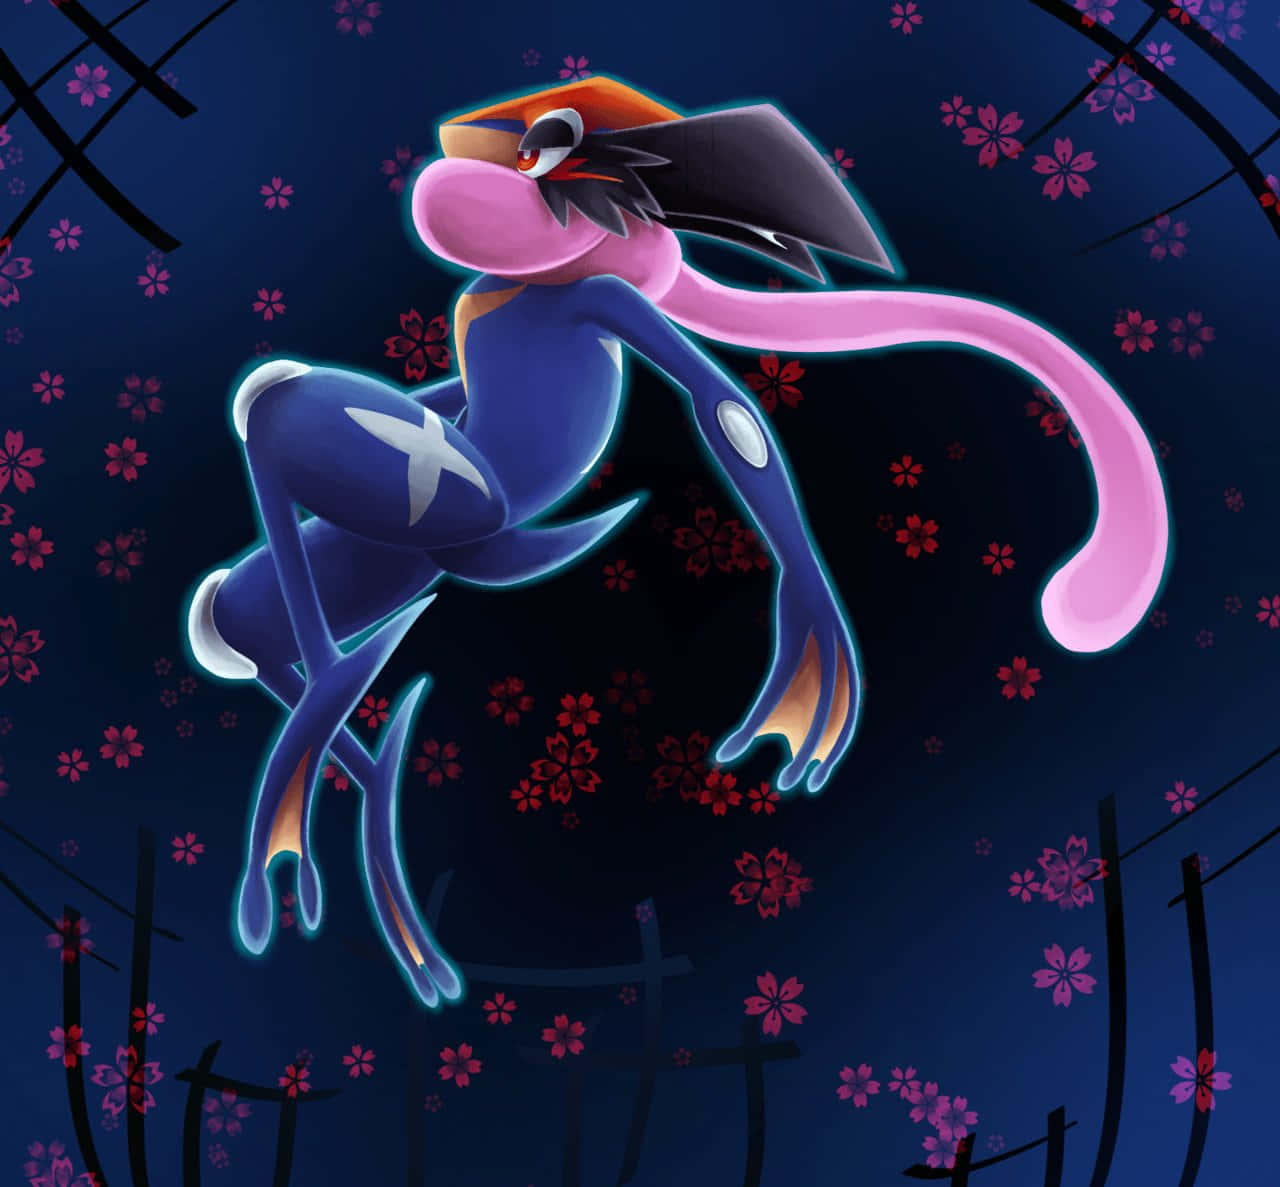 Greninja,il Pokémon Ninja Mitico